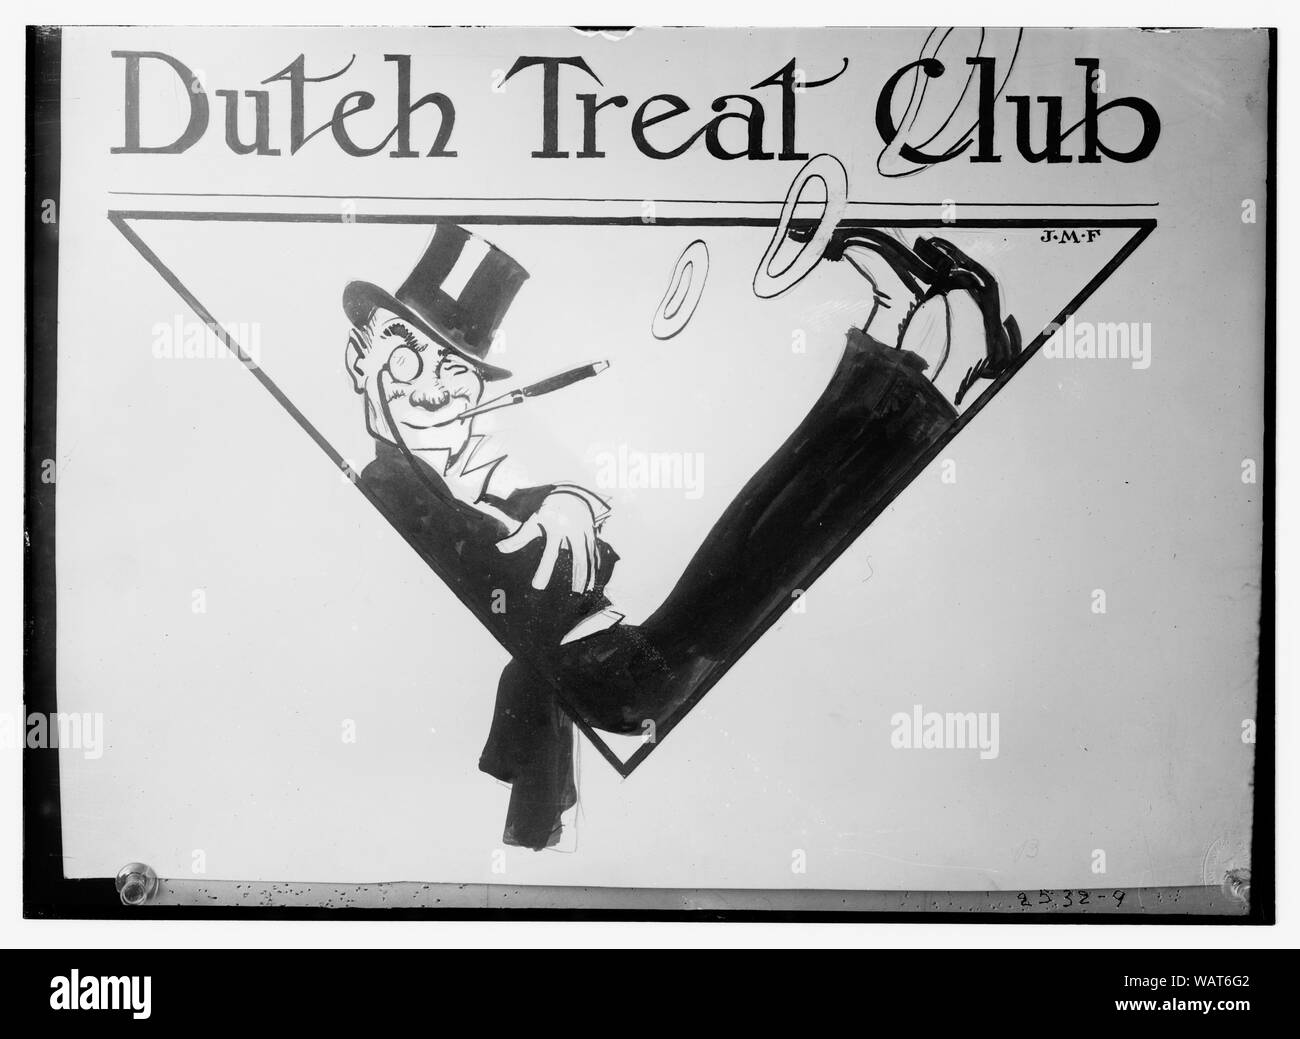 Dutch Treat Club - [cover drawing?] Stock Photo